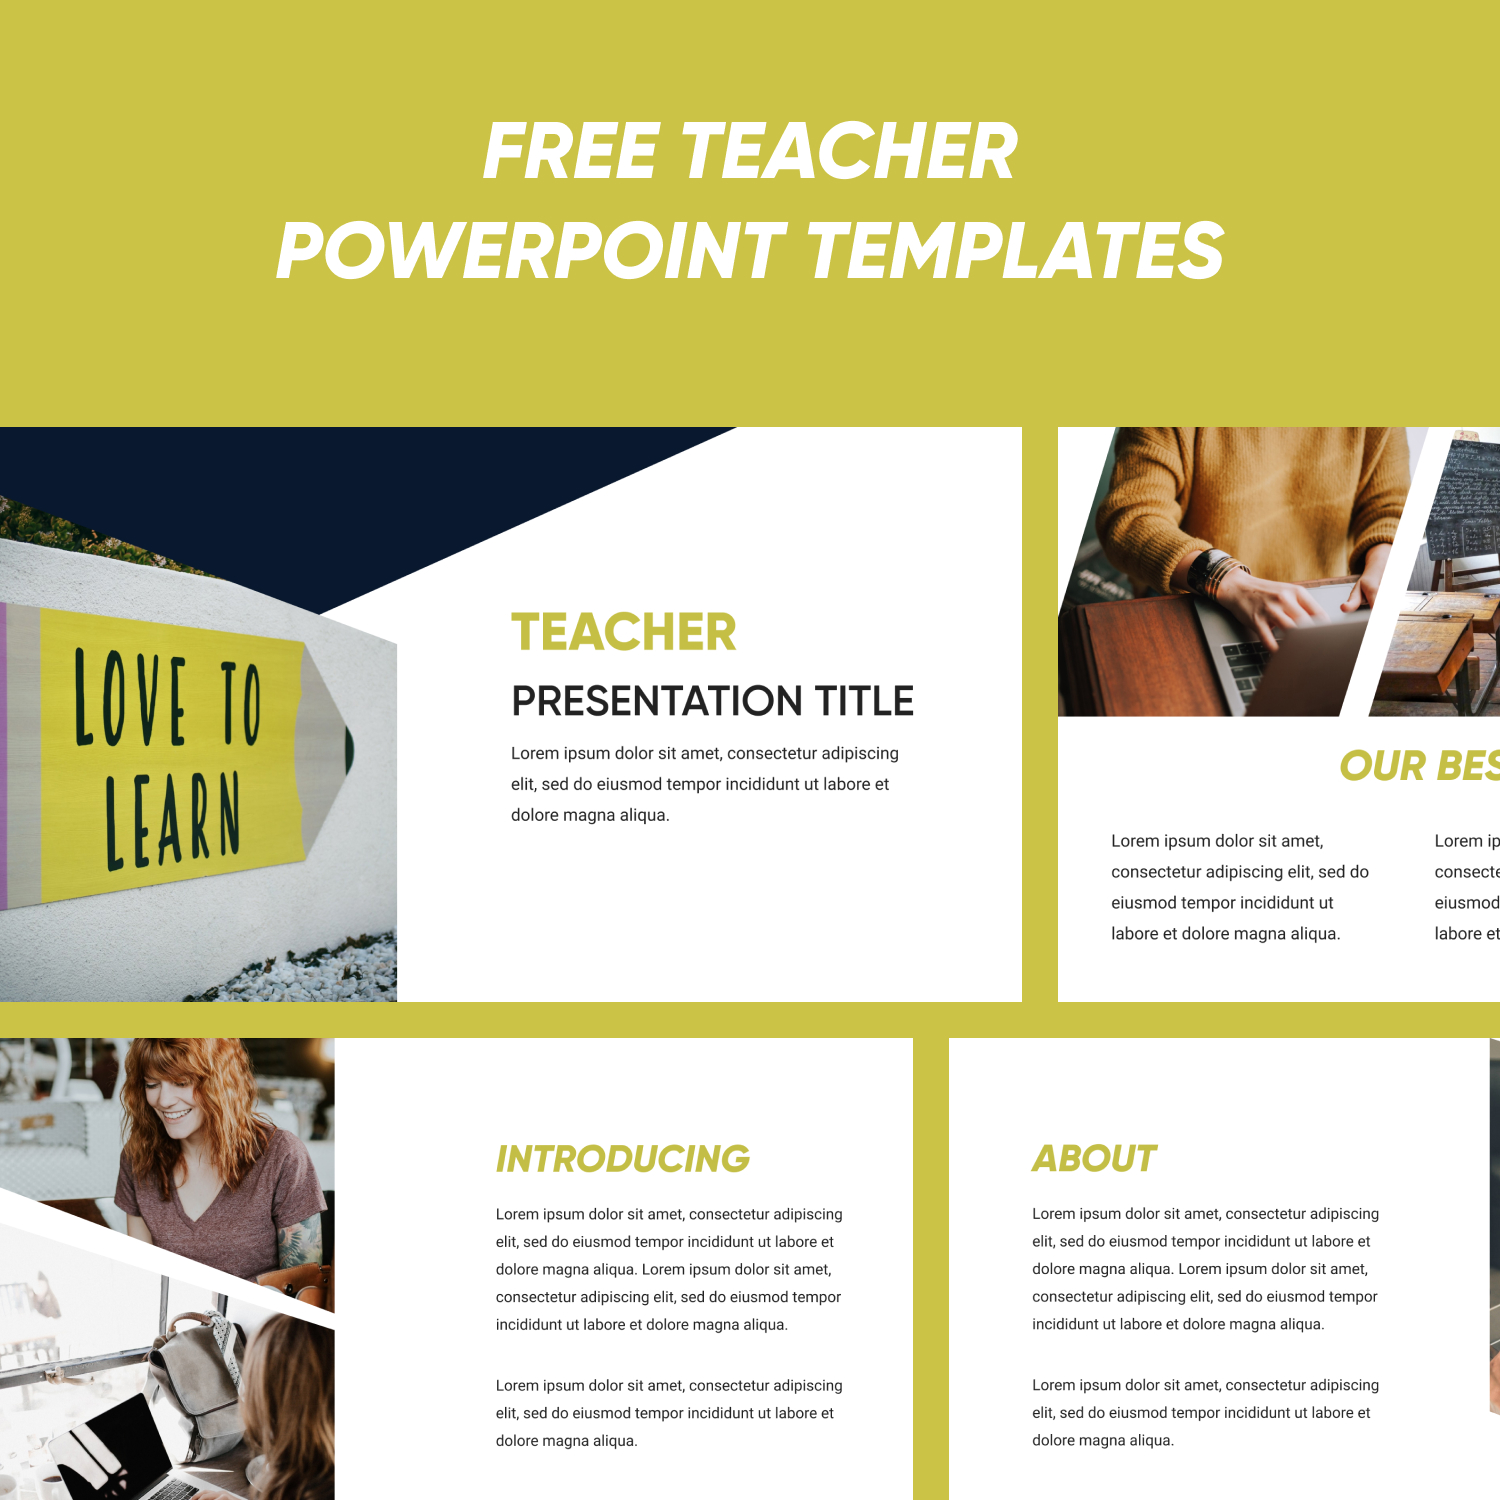 Teacher powerpoint templates preview.